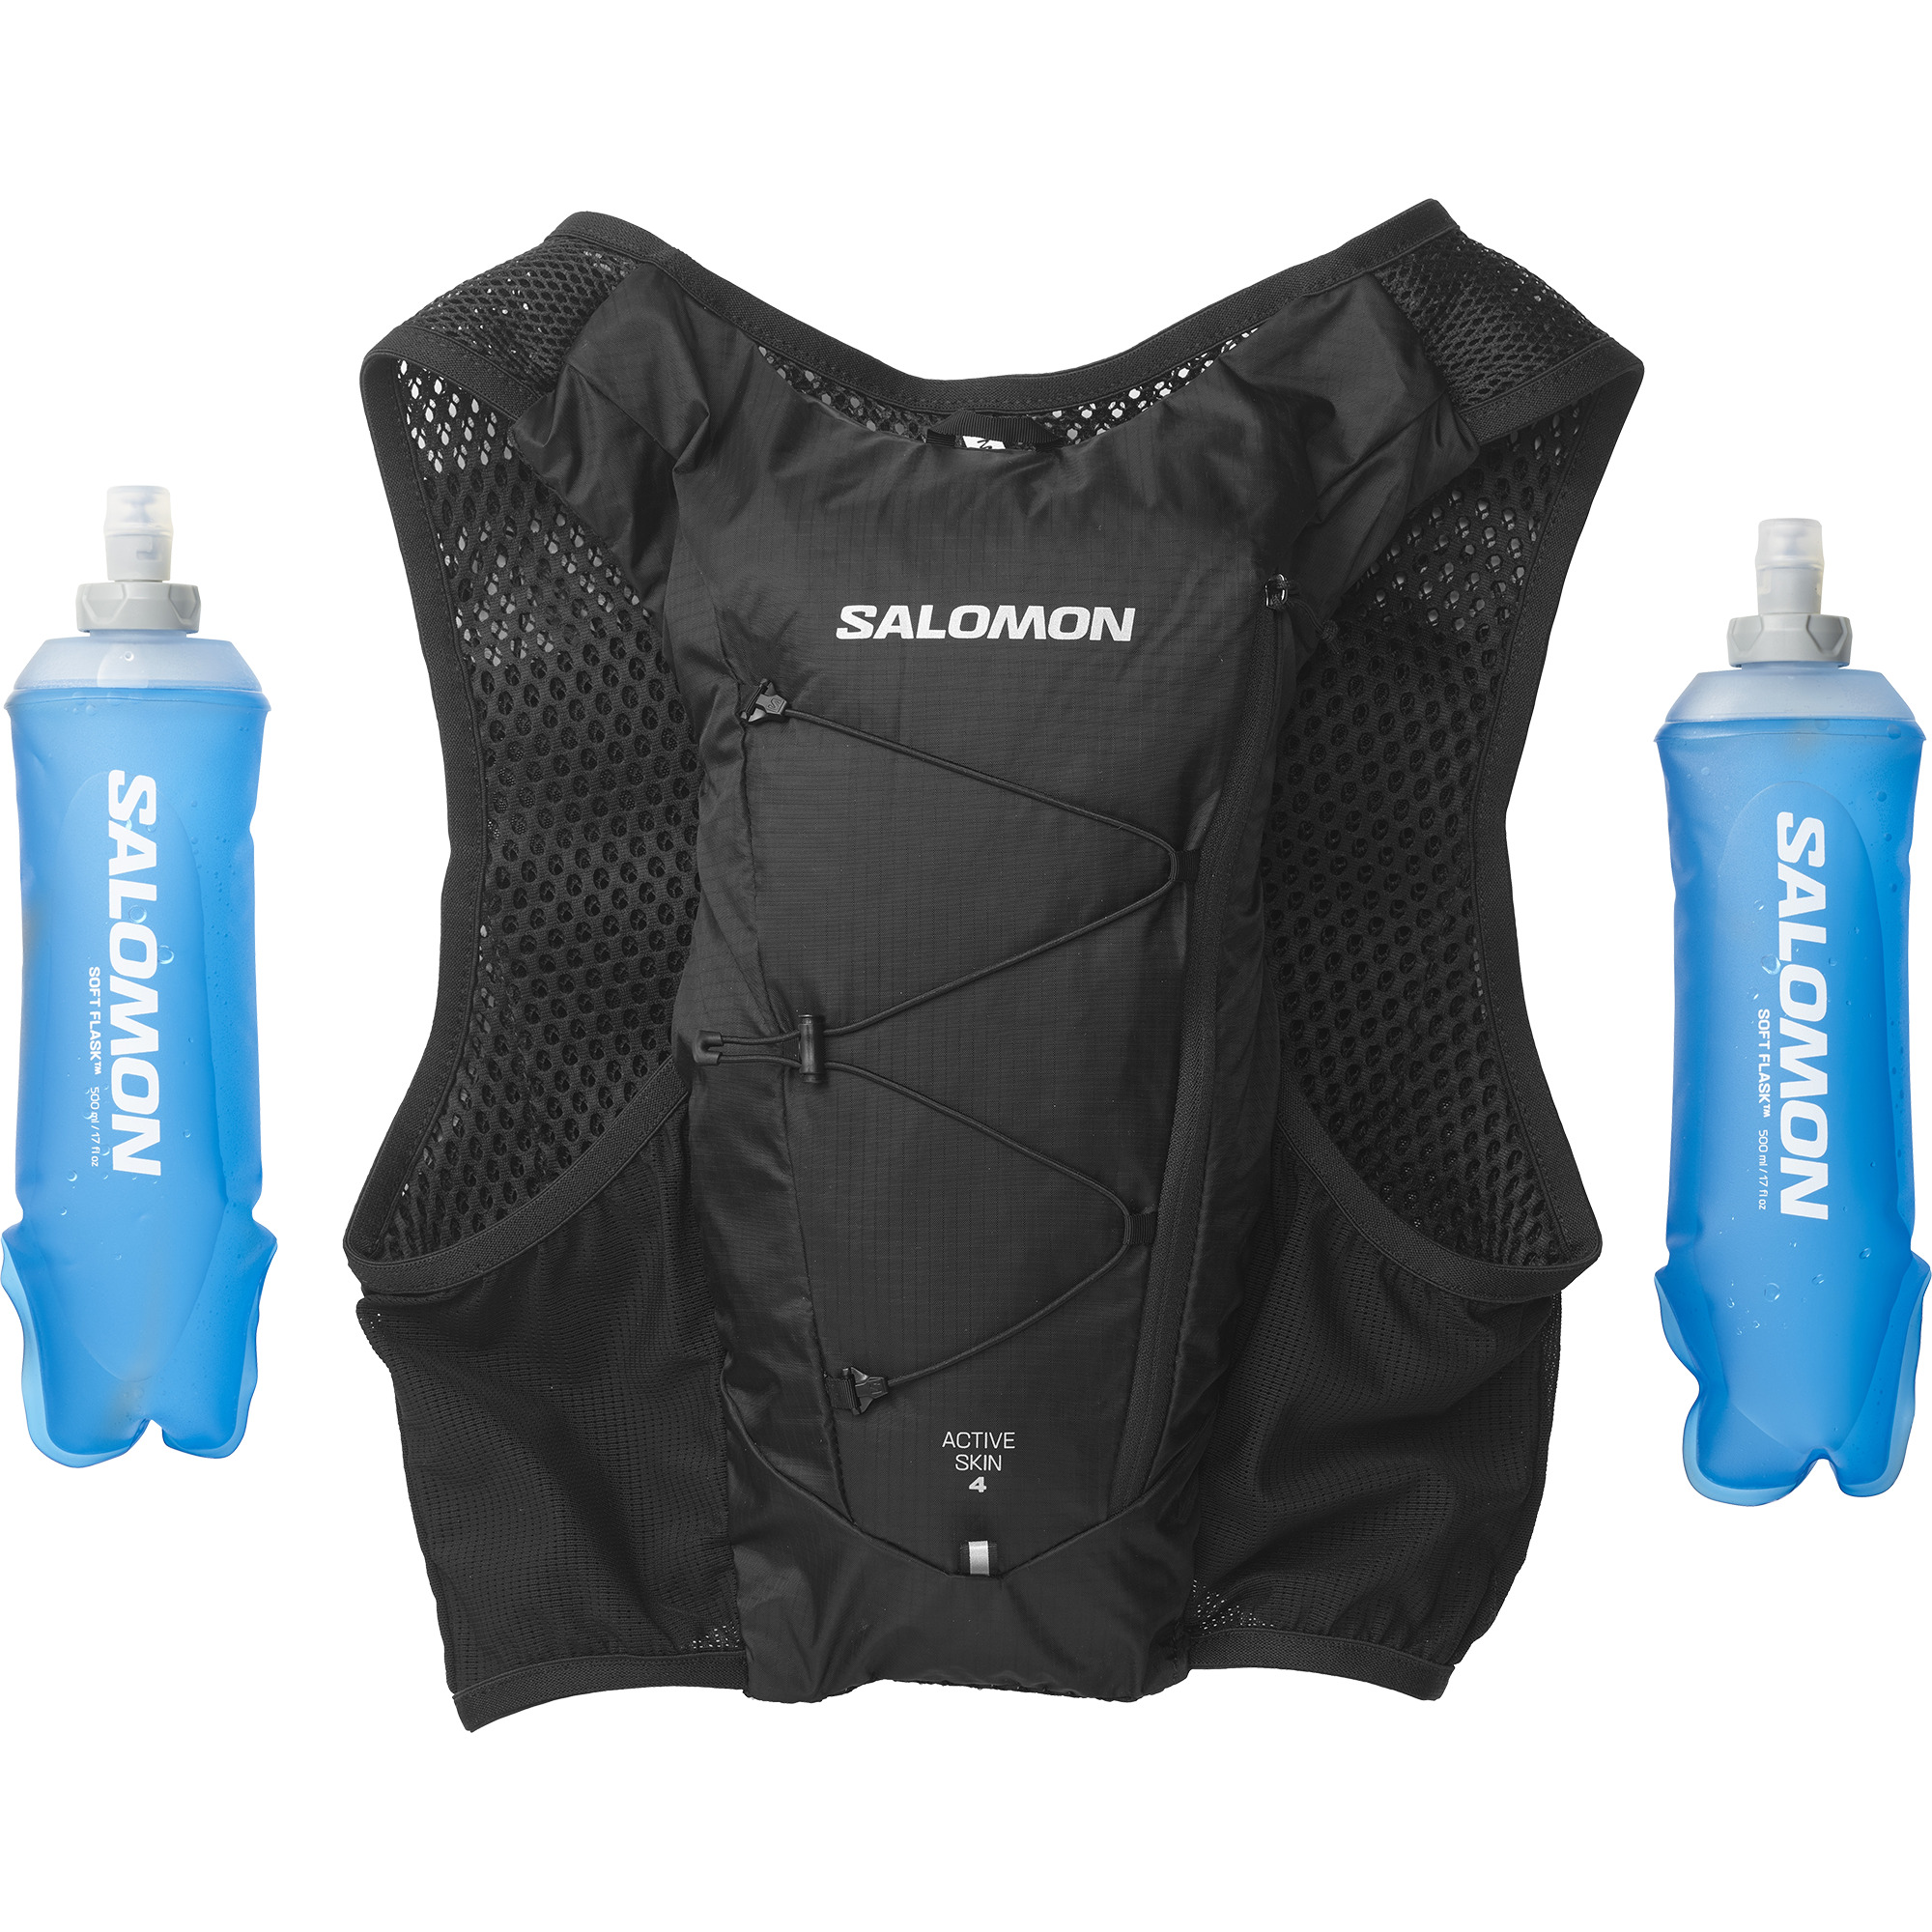 SALOMON ACTIVE SKIN 4 with flasks BLACK 2023